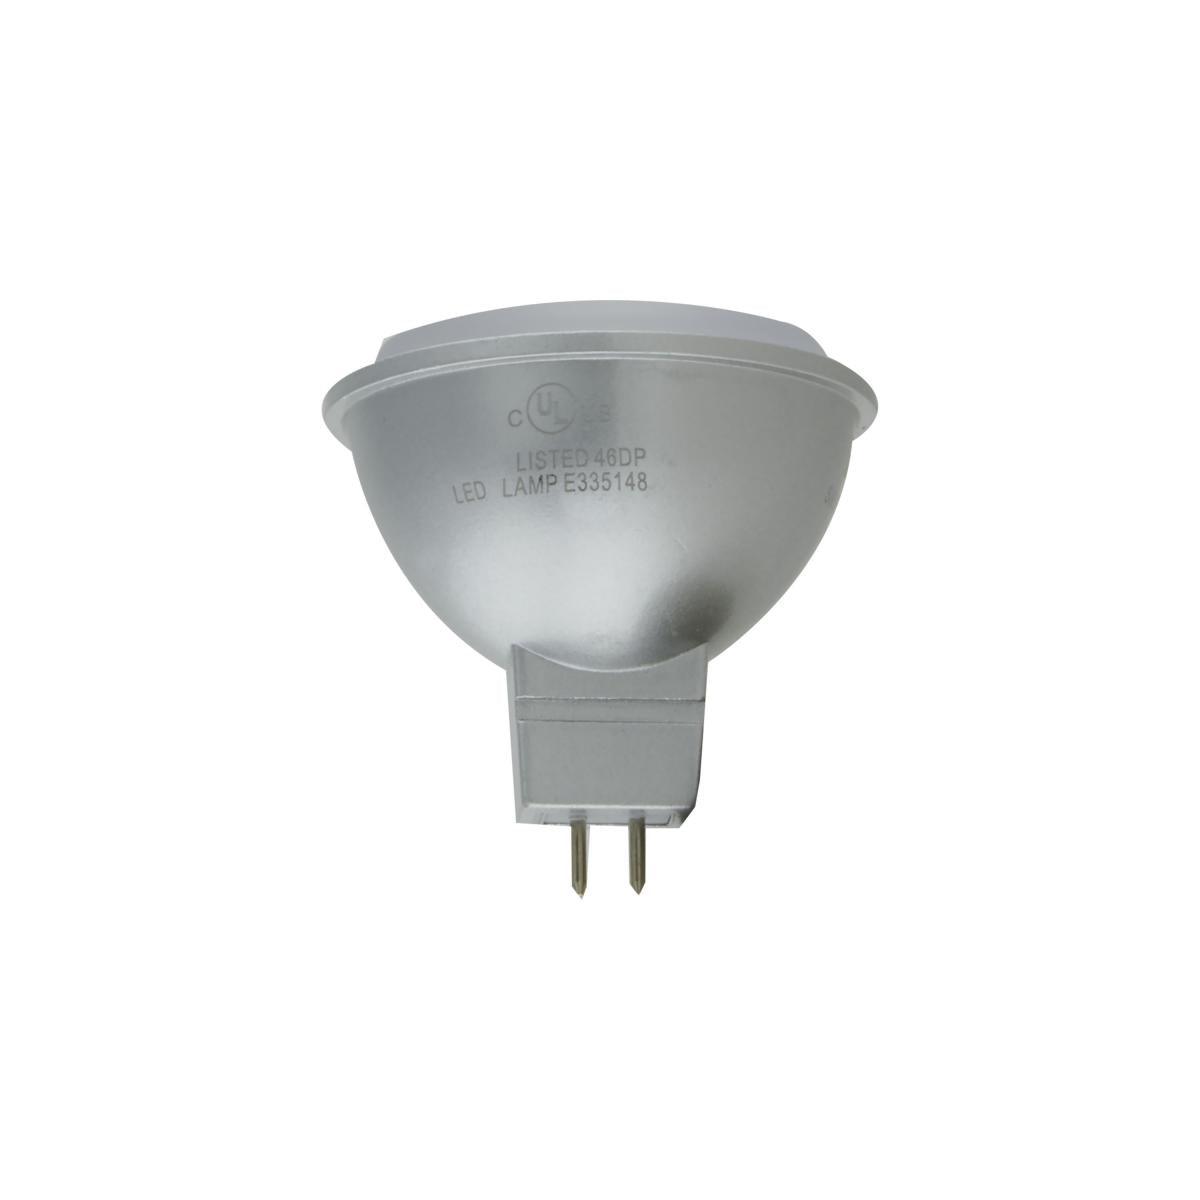 MR16 Reflector LED bulb, 8 watt, 490 Lumens, 2700K, GU5.3 Base, 15 Deg. Spot